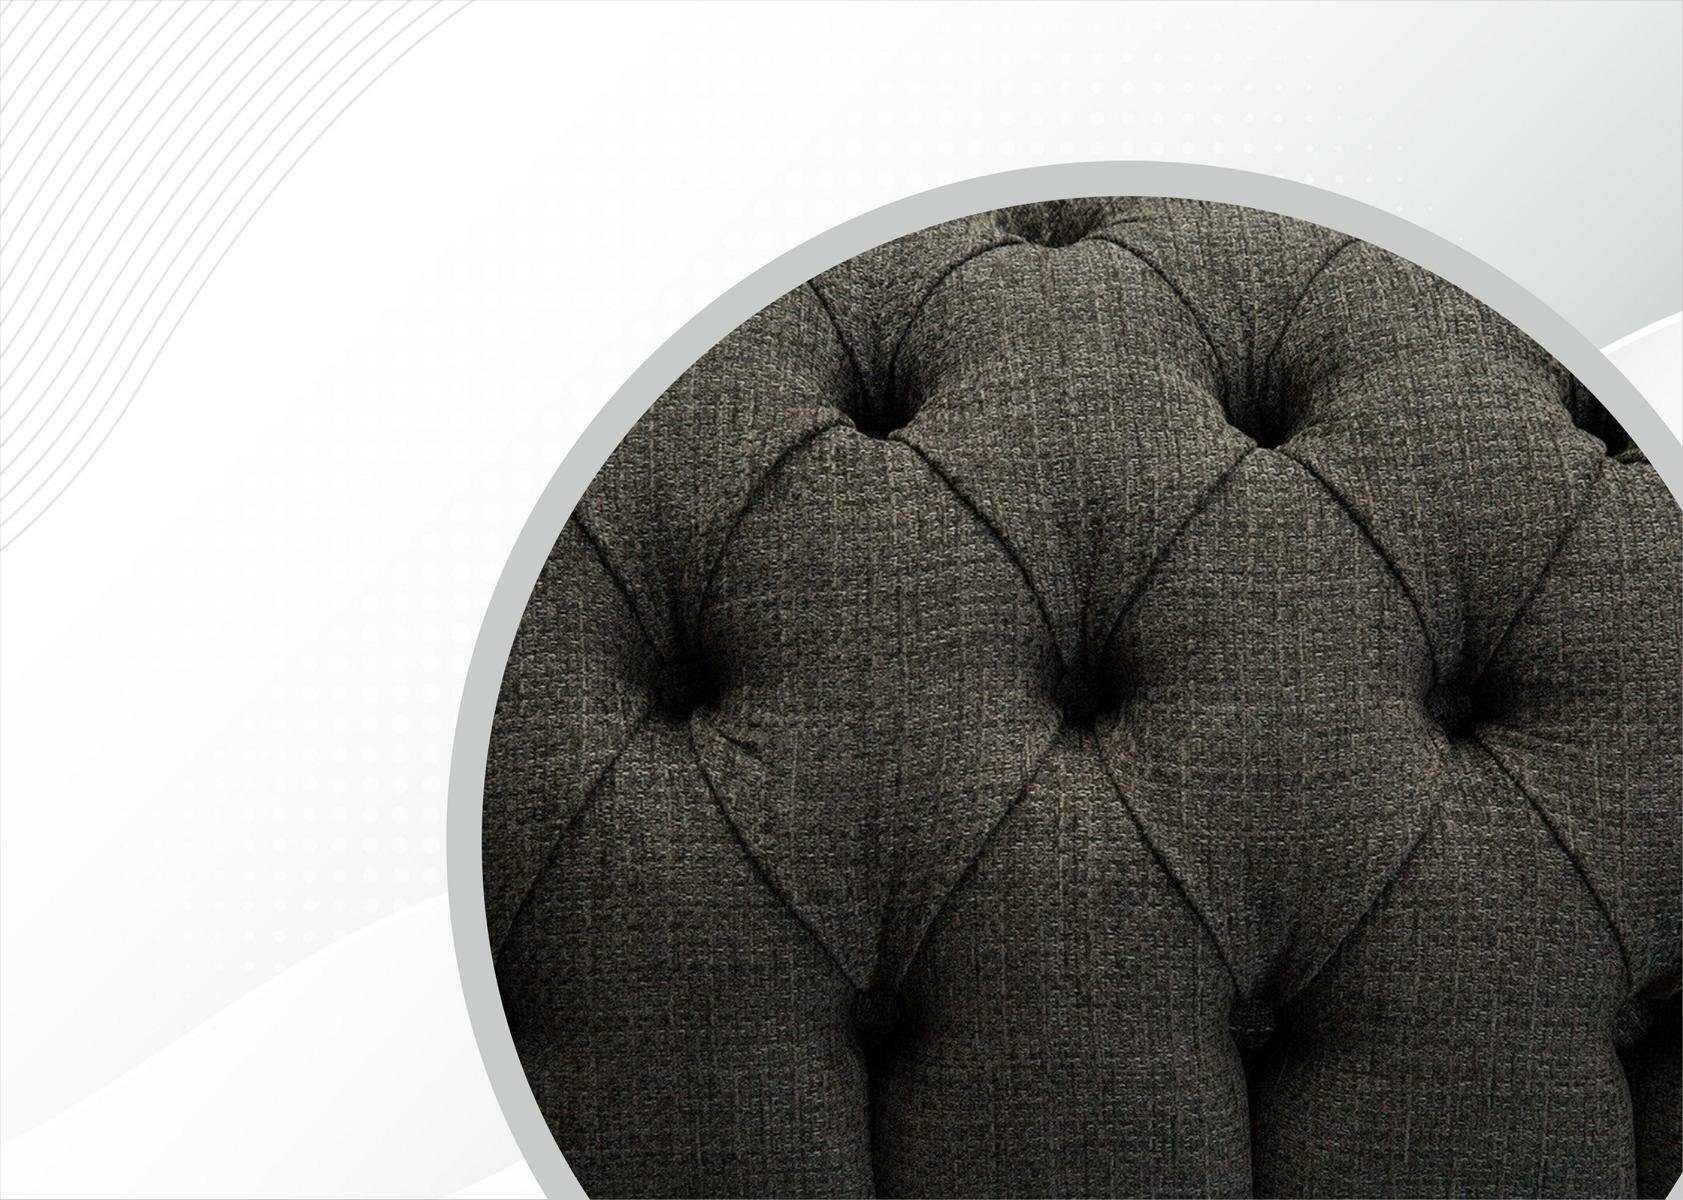 Design Chesterfield-Sofa, 225 3 cm Sitzer Sofa Couch Chesterfield Sofa JVmoebel